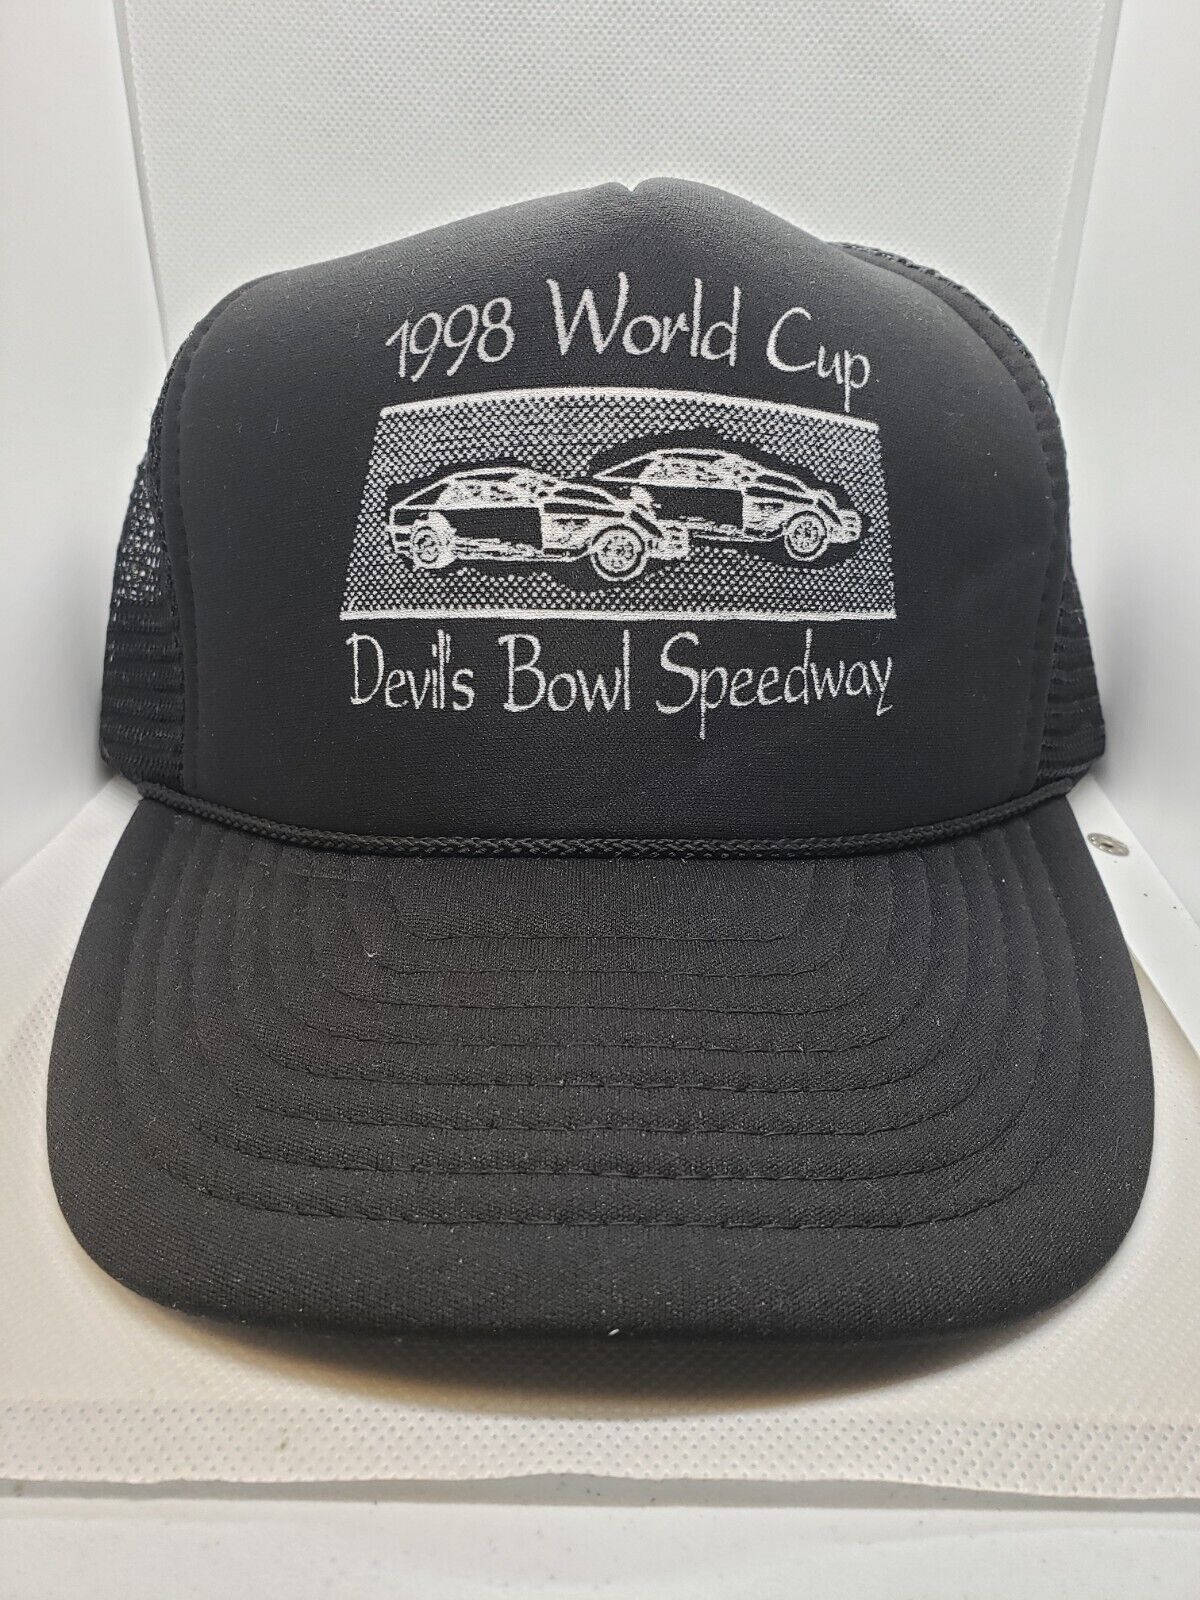 Vintage 1998 World Cup Devils Bowl Speedway Snapback Truckers Cap Black